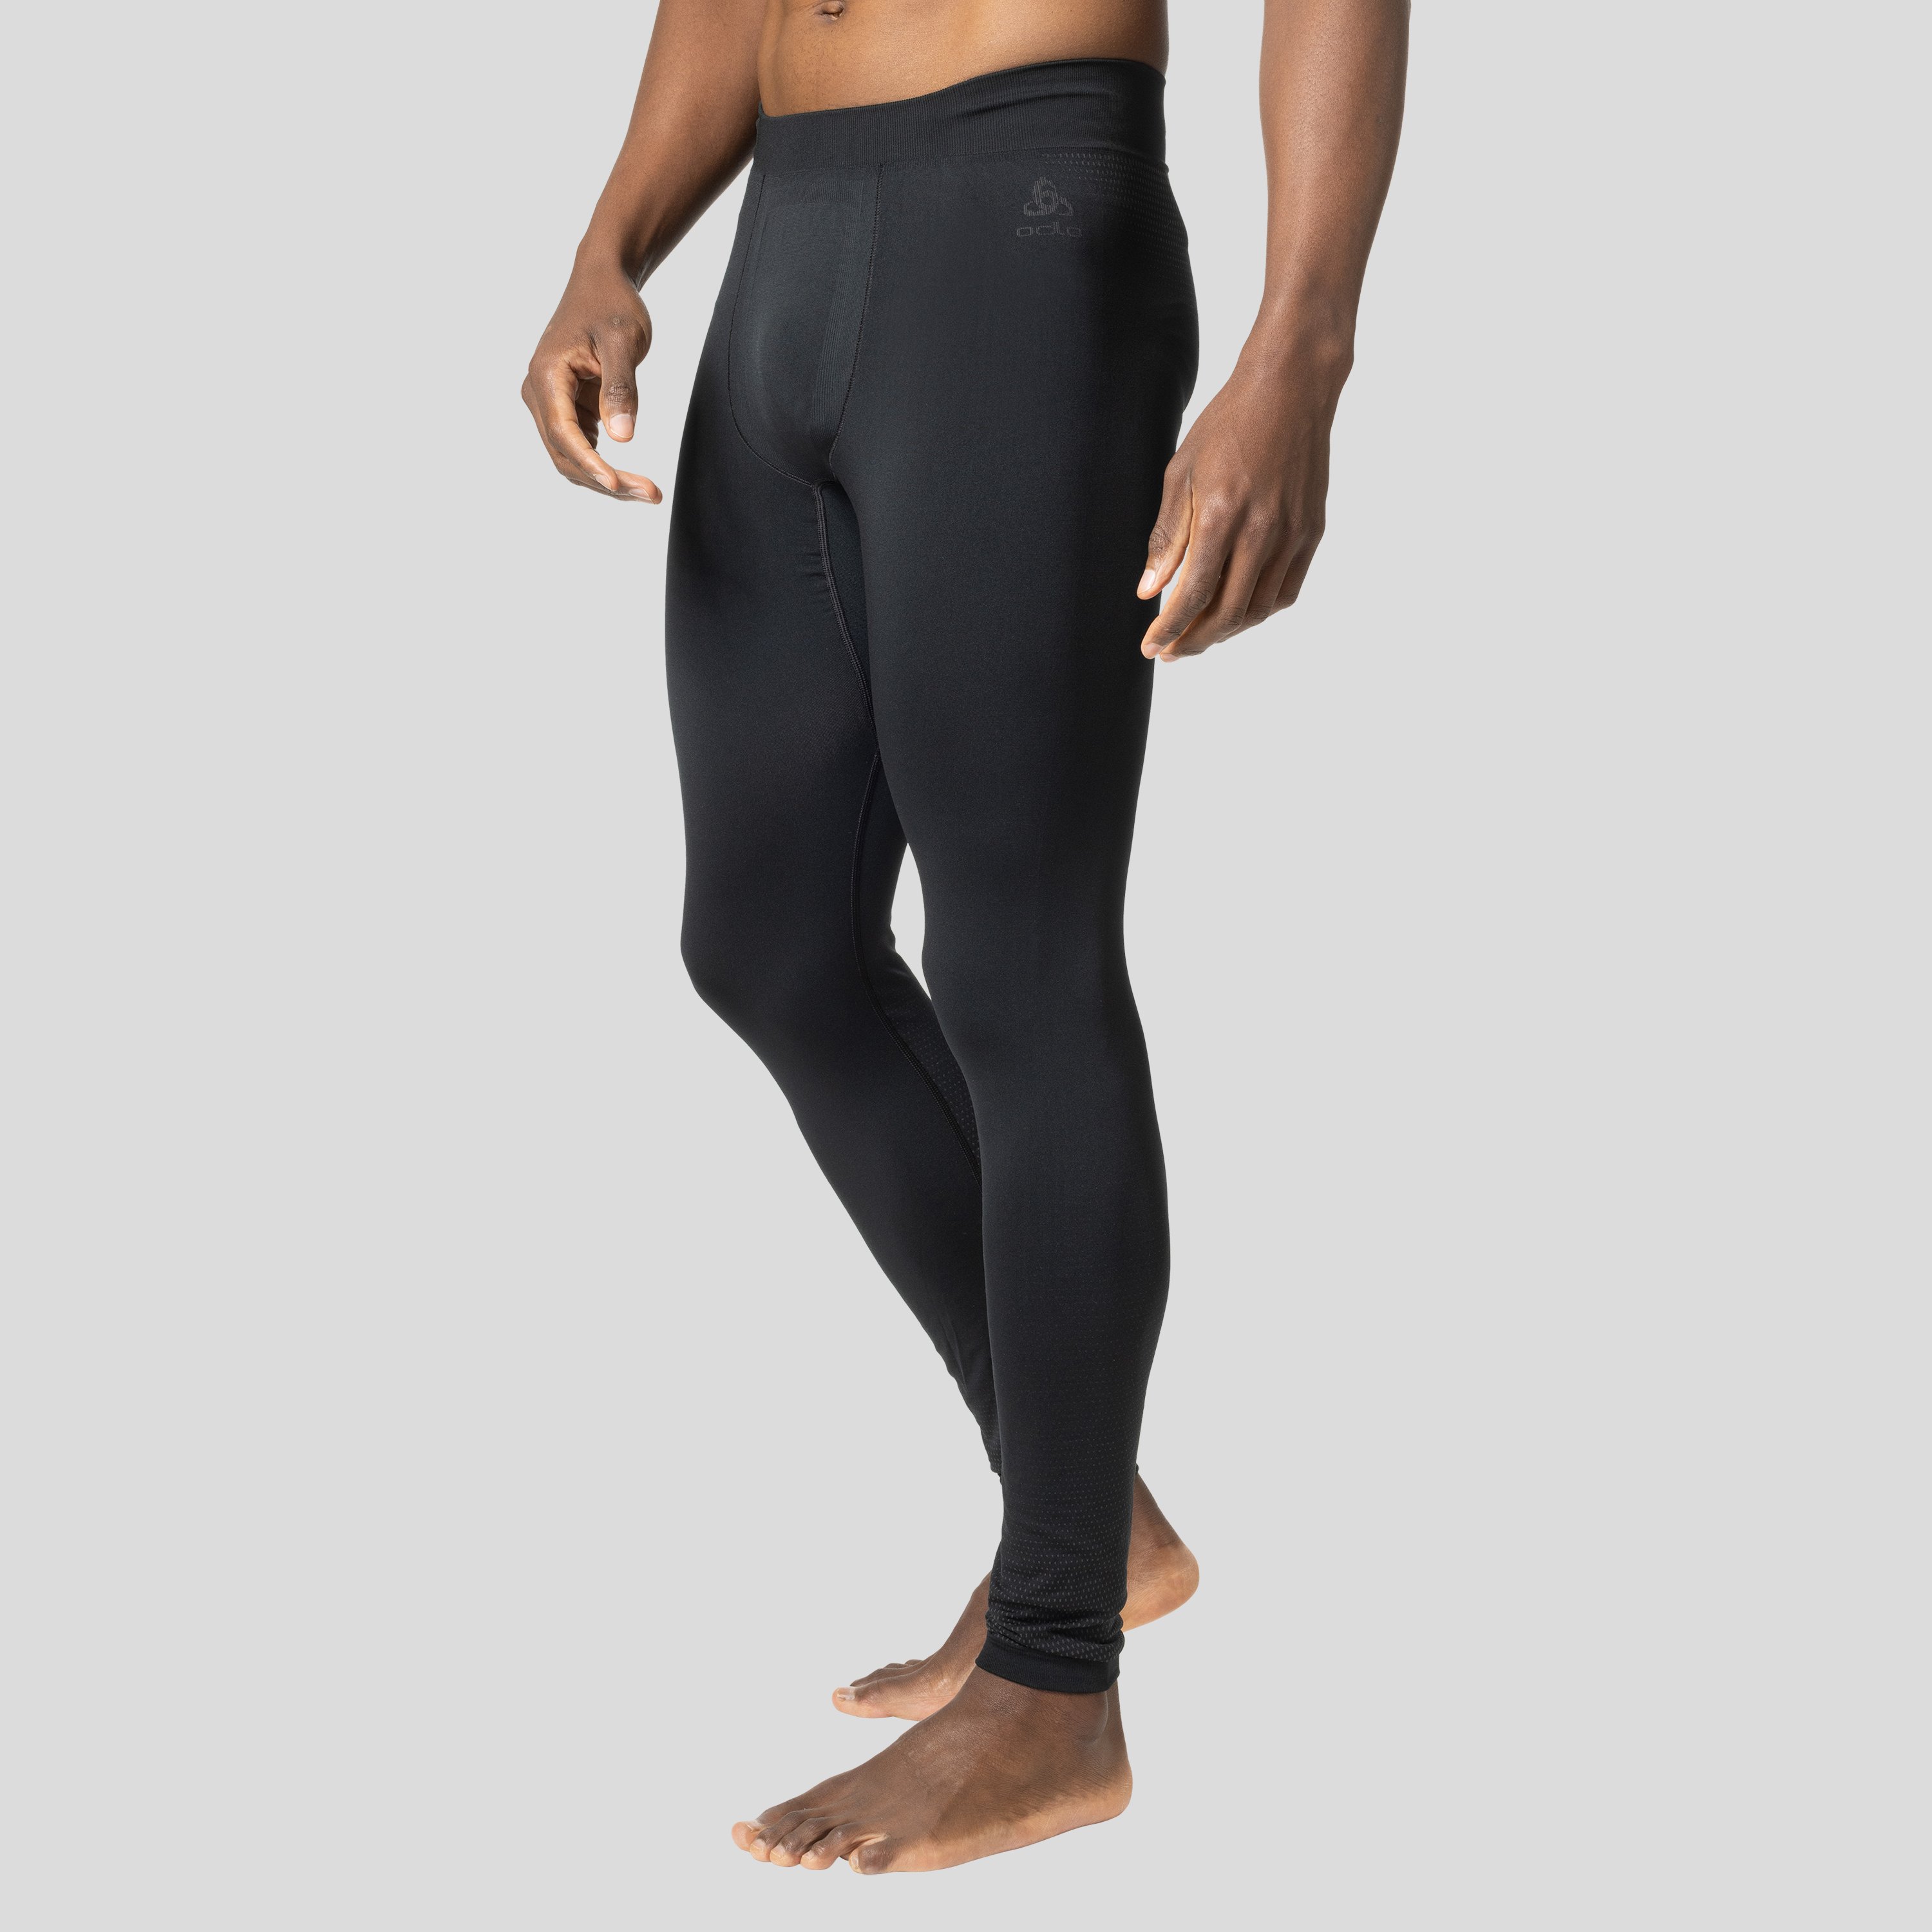 ODLO Performance Light Base-Layer-Pants für Herren, S, schwarz